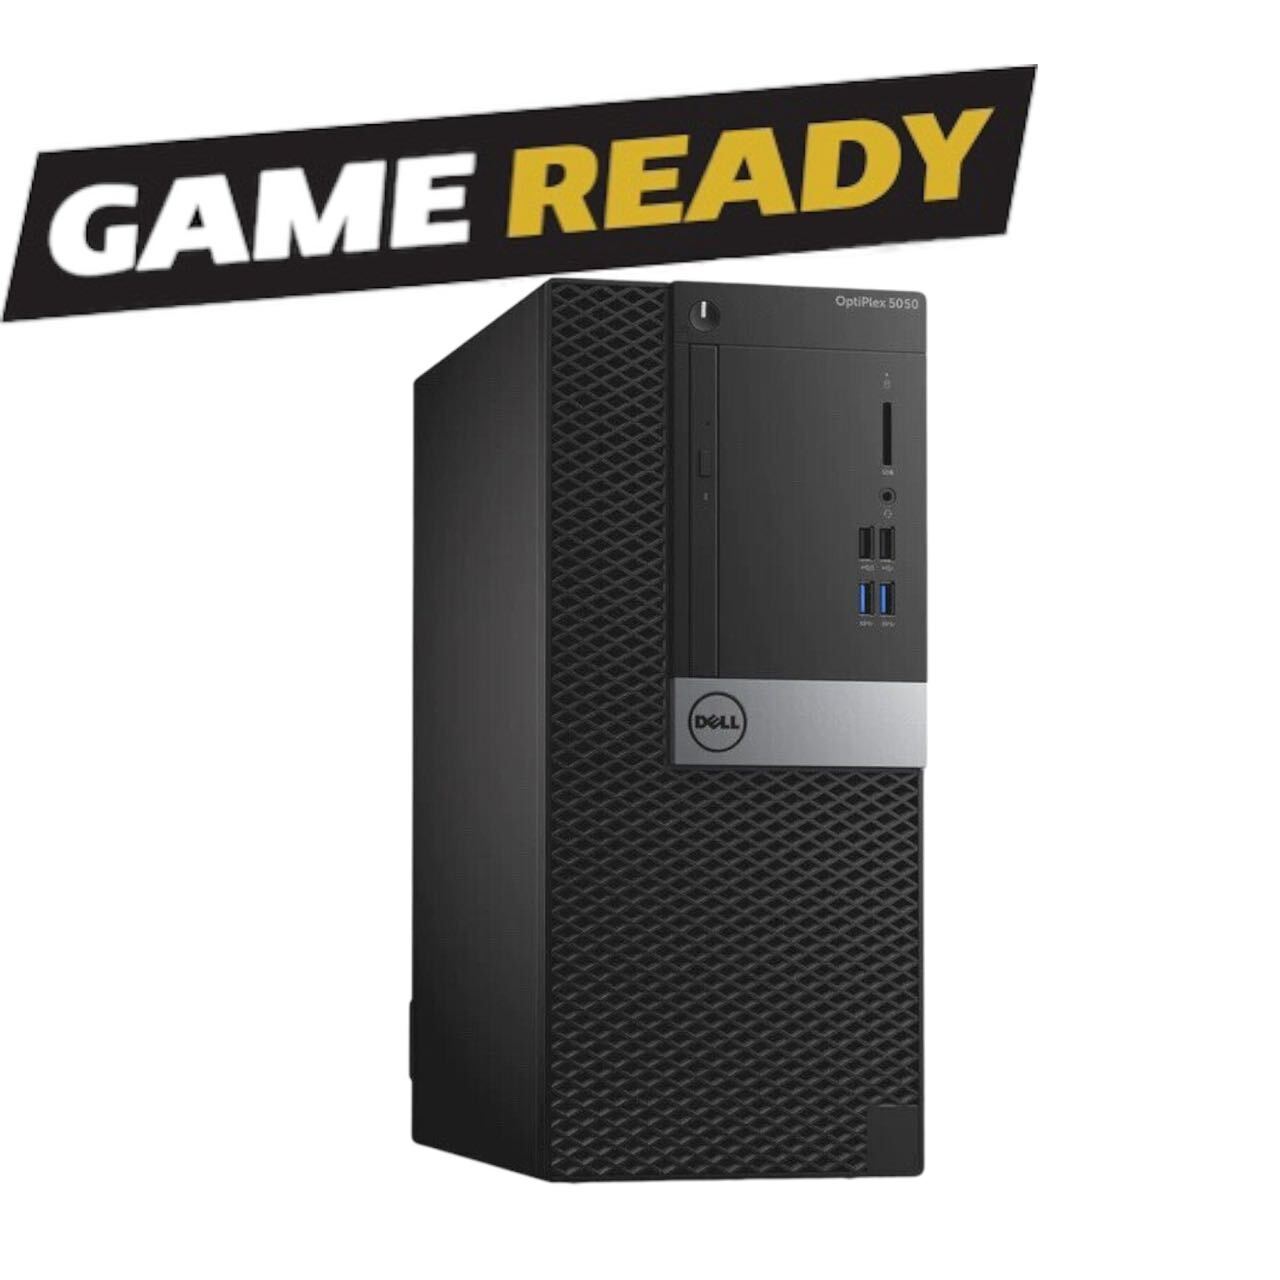 GAMING READY DELL Desktop Computer PC i7 GTX745 16GB RAM 512GB SSD W11 WIFI BT